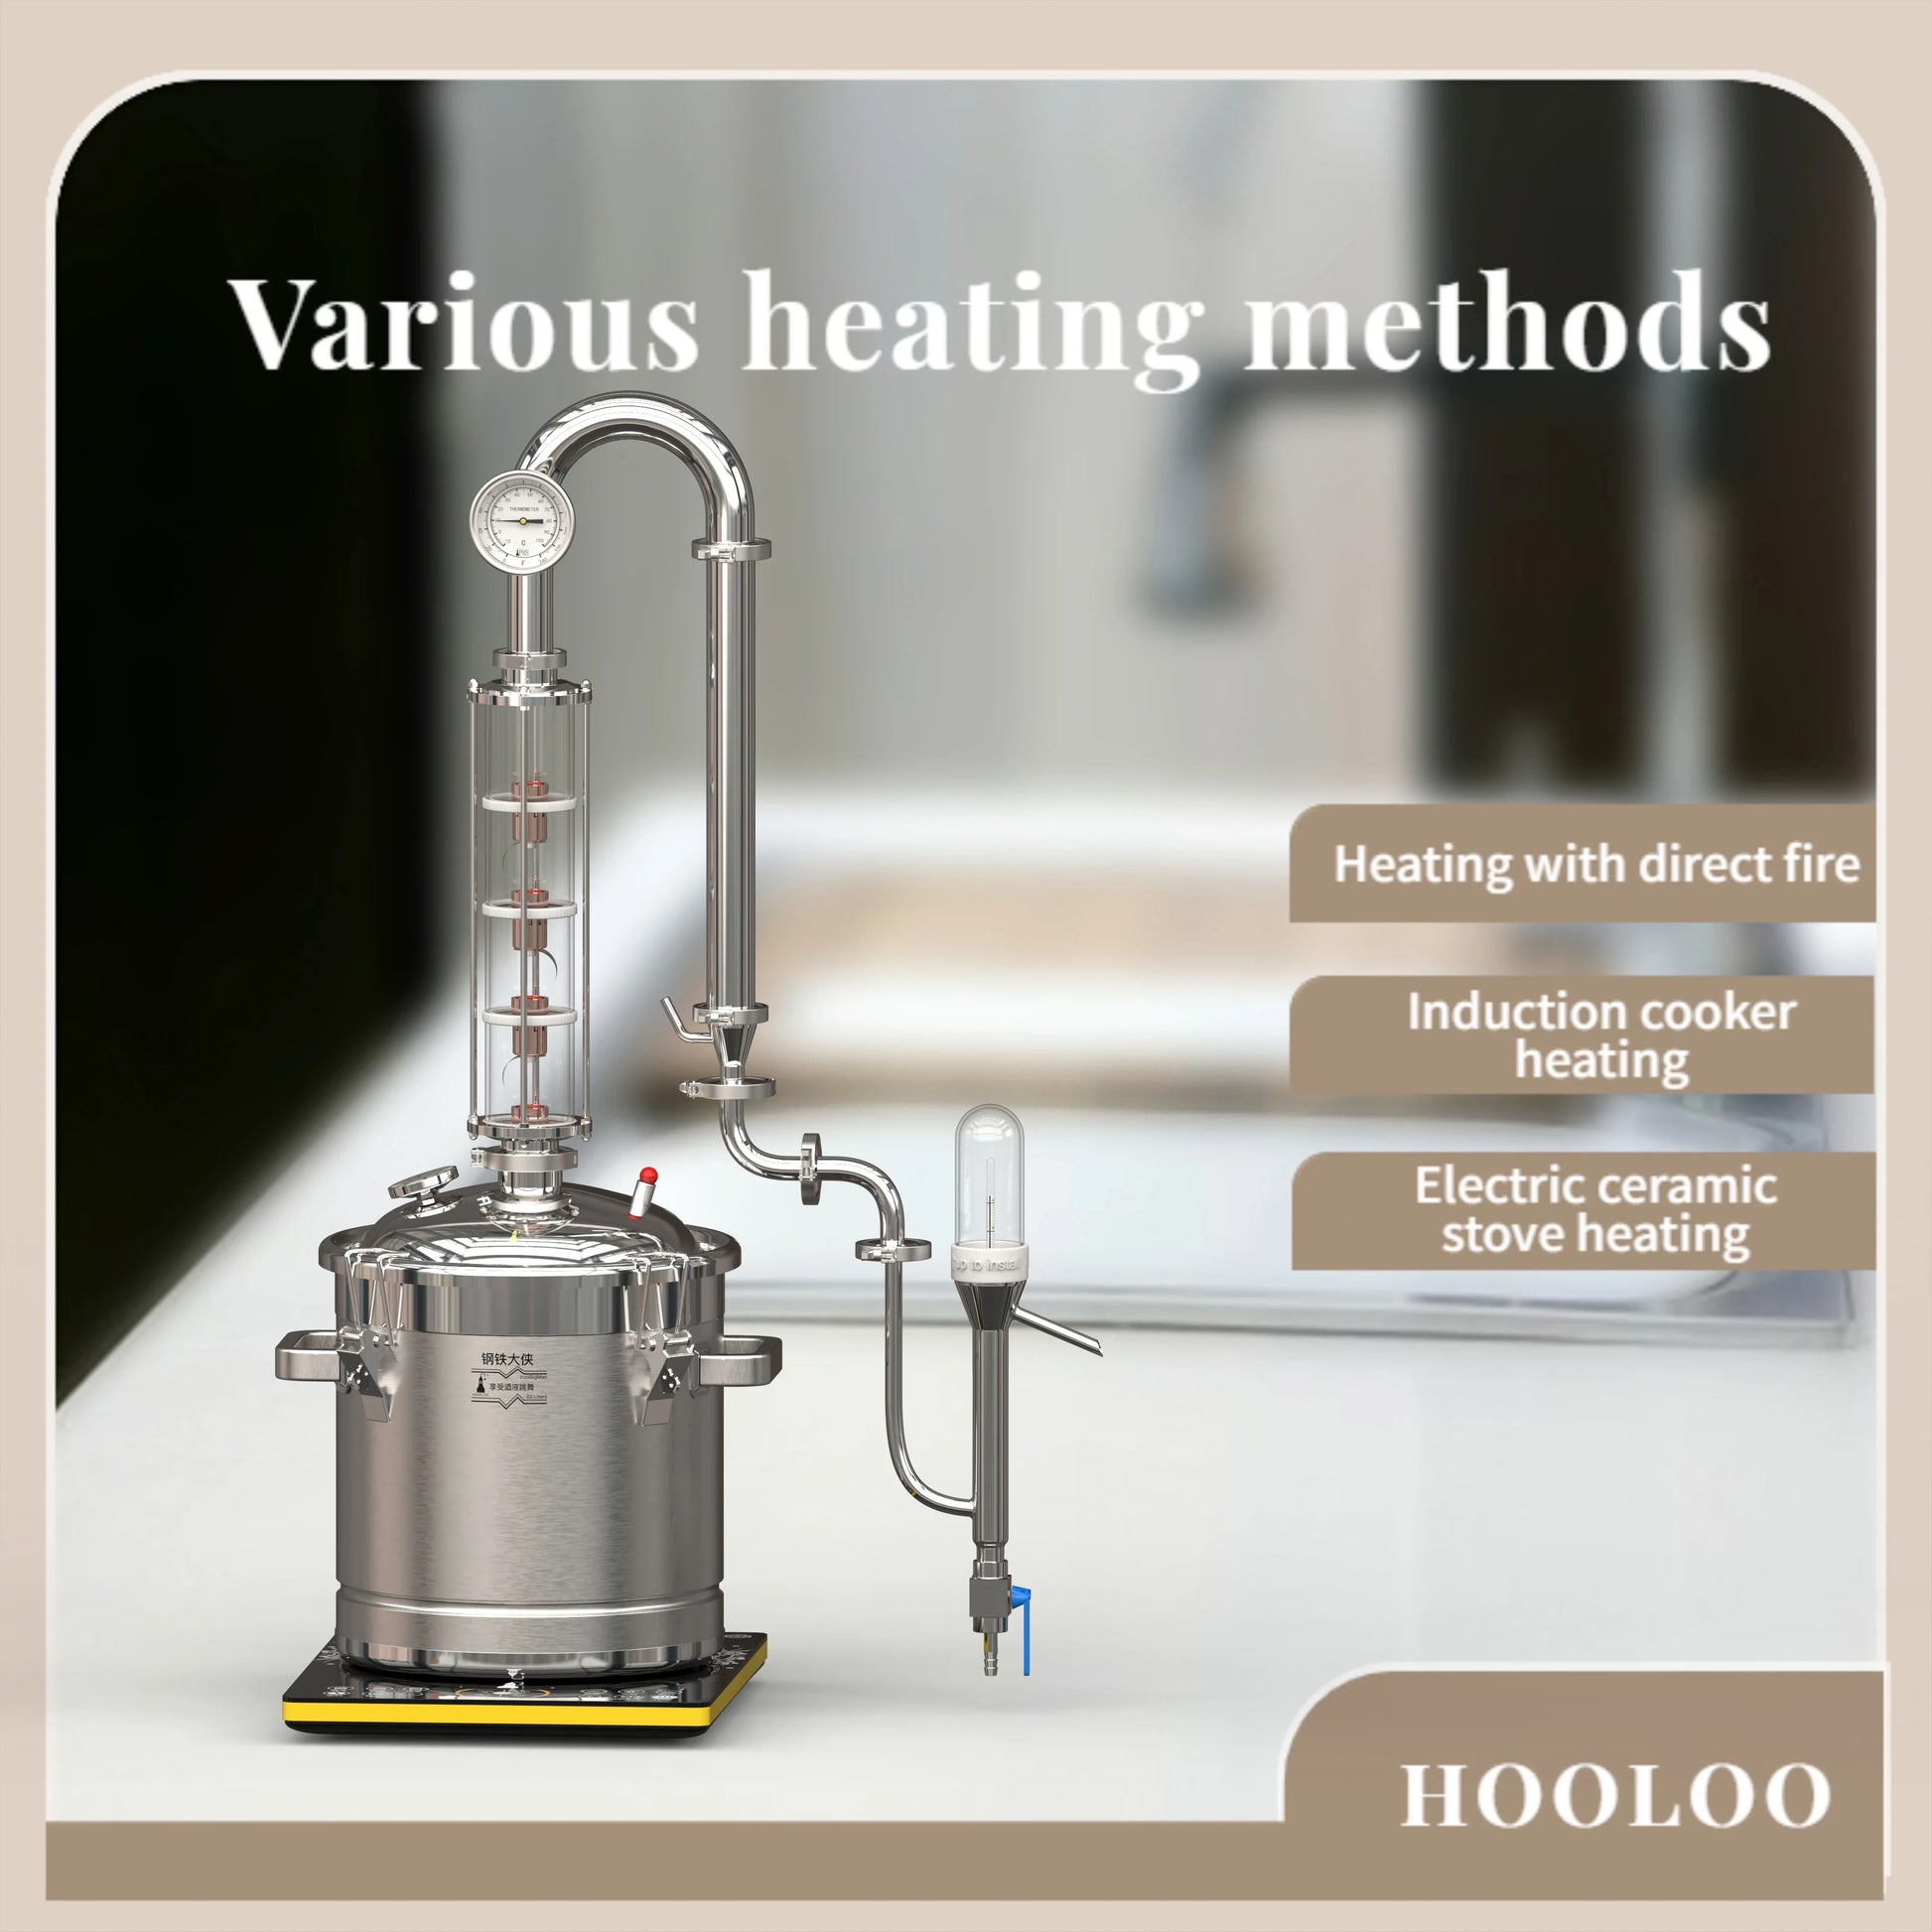 CT22【Free shipping worldwide!】 - Hooloo Distilling Equipment Supply